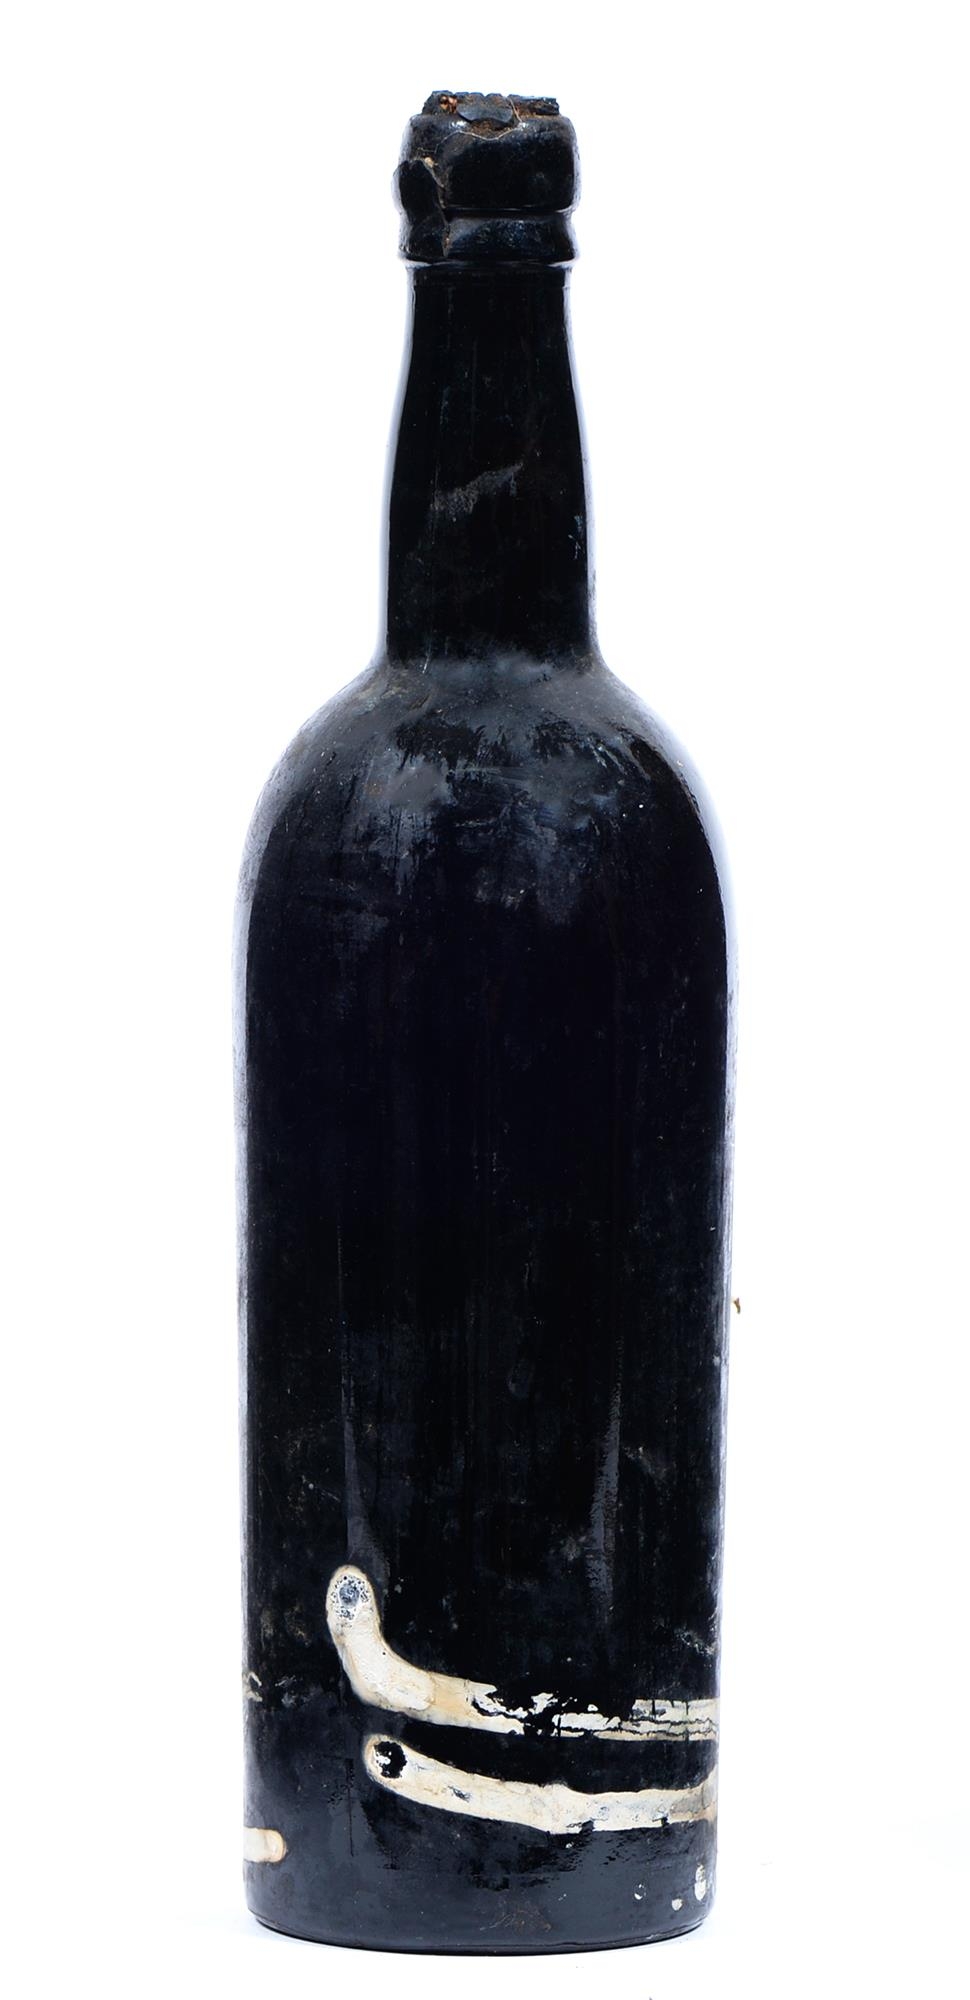 Dow Vintage Port, 1955, one bottle, wax capsule (some missing), label fair, level into shoulder - Image 2 of 3